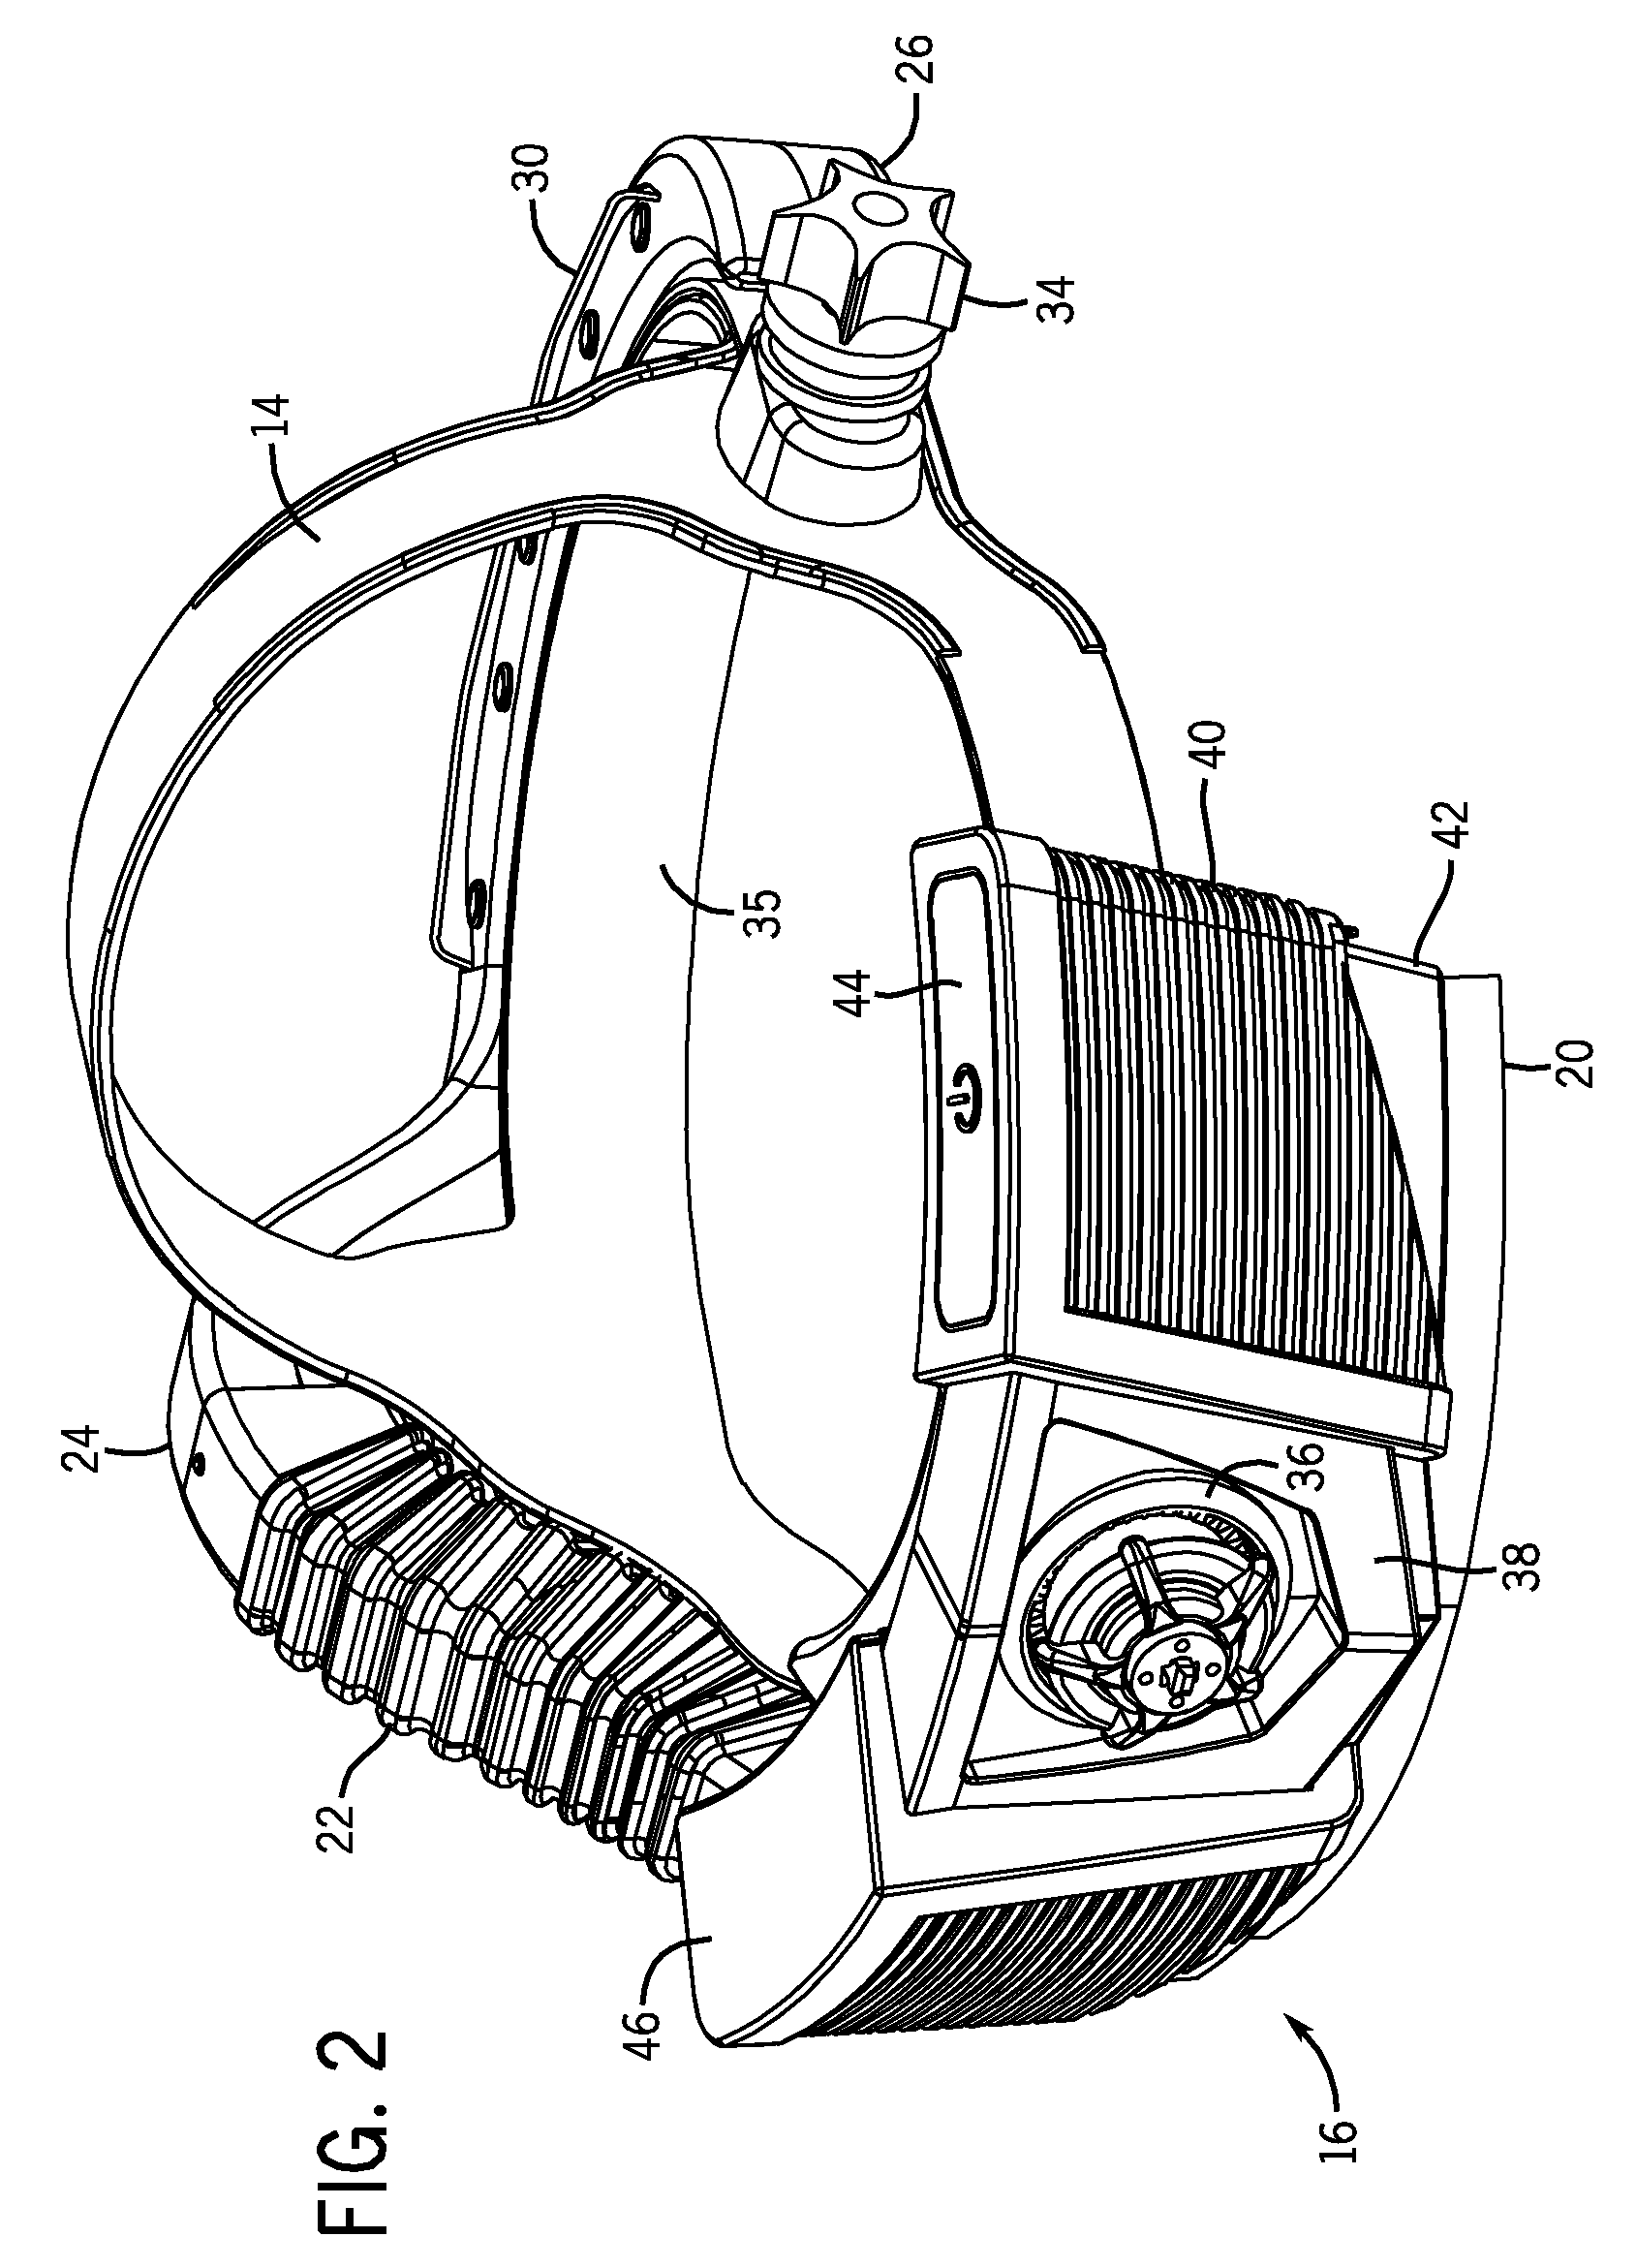 Airflow Headgear for a Welding Helmet